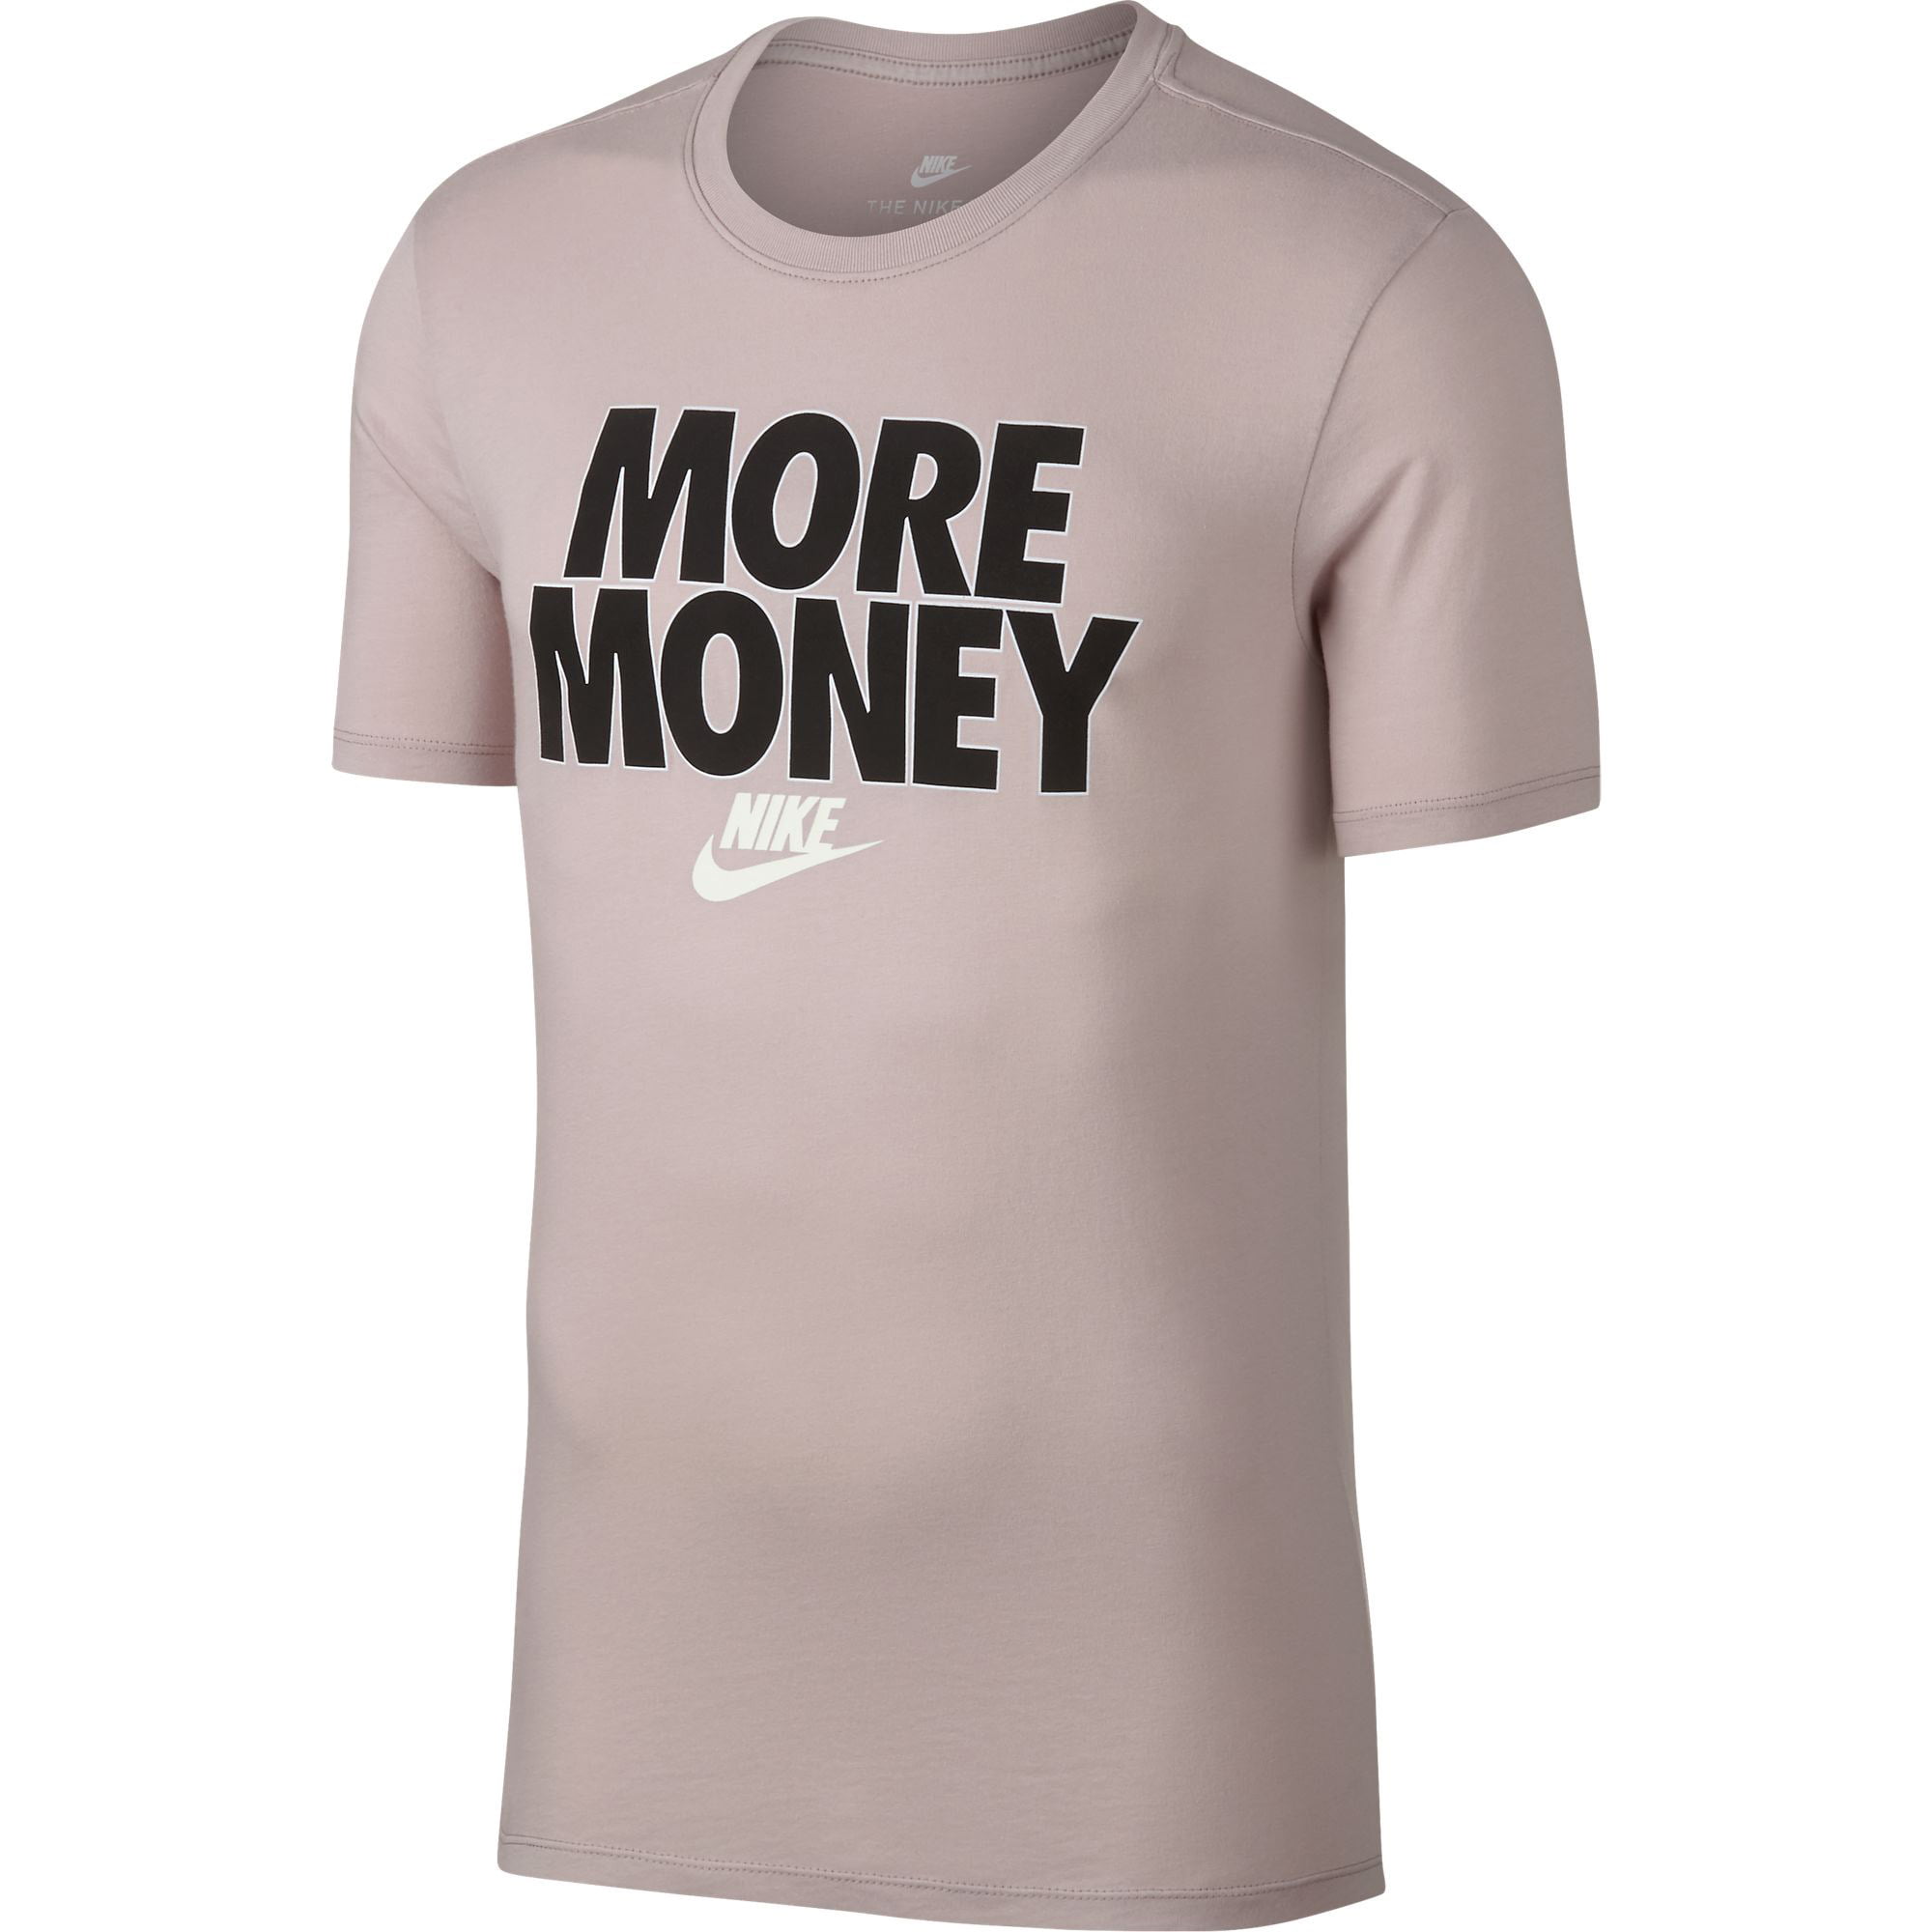 Nike "More Money" Men's T-Shirt Rose-Black ah6124-684 - Walmart.com